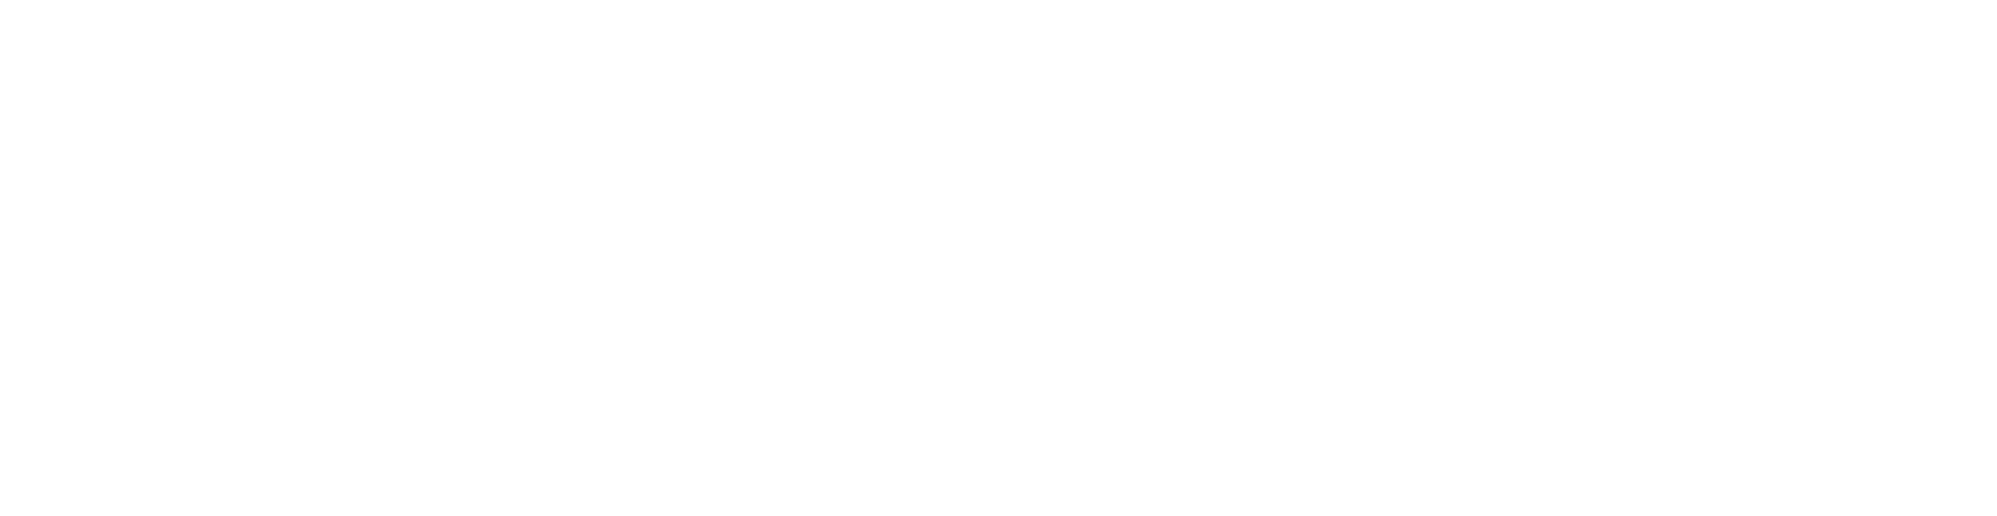 ChiaHub | 奇亚导航 | 全球领先的Chia生态信息服务导航平台